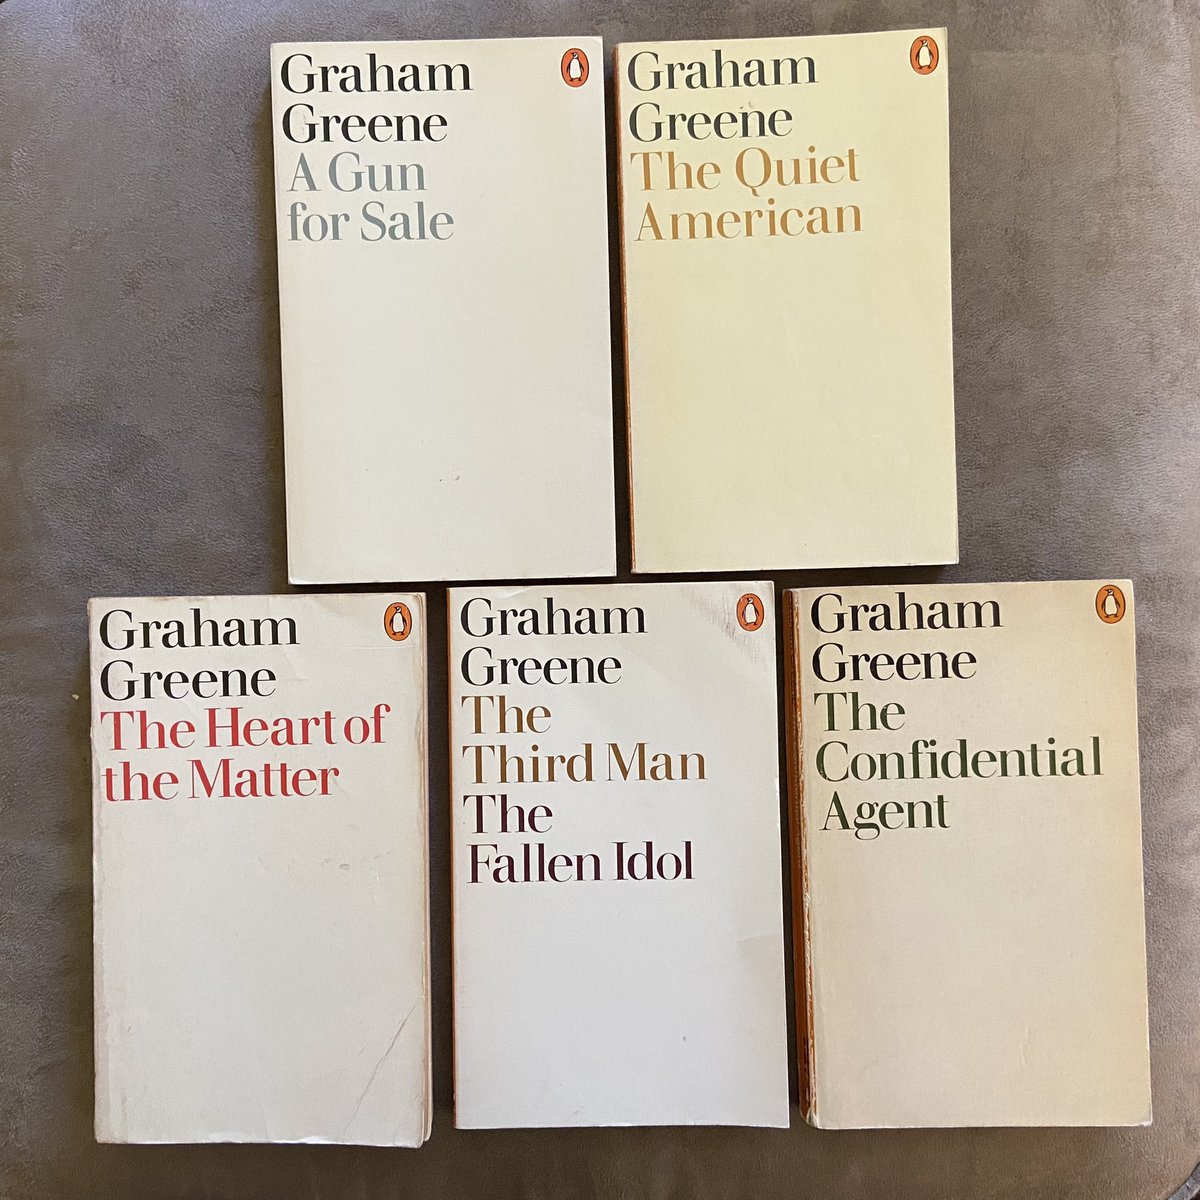 Minimalist Graham Greene cover art.